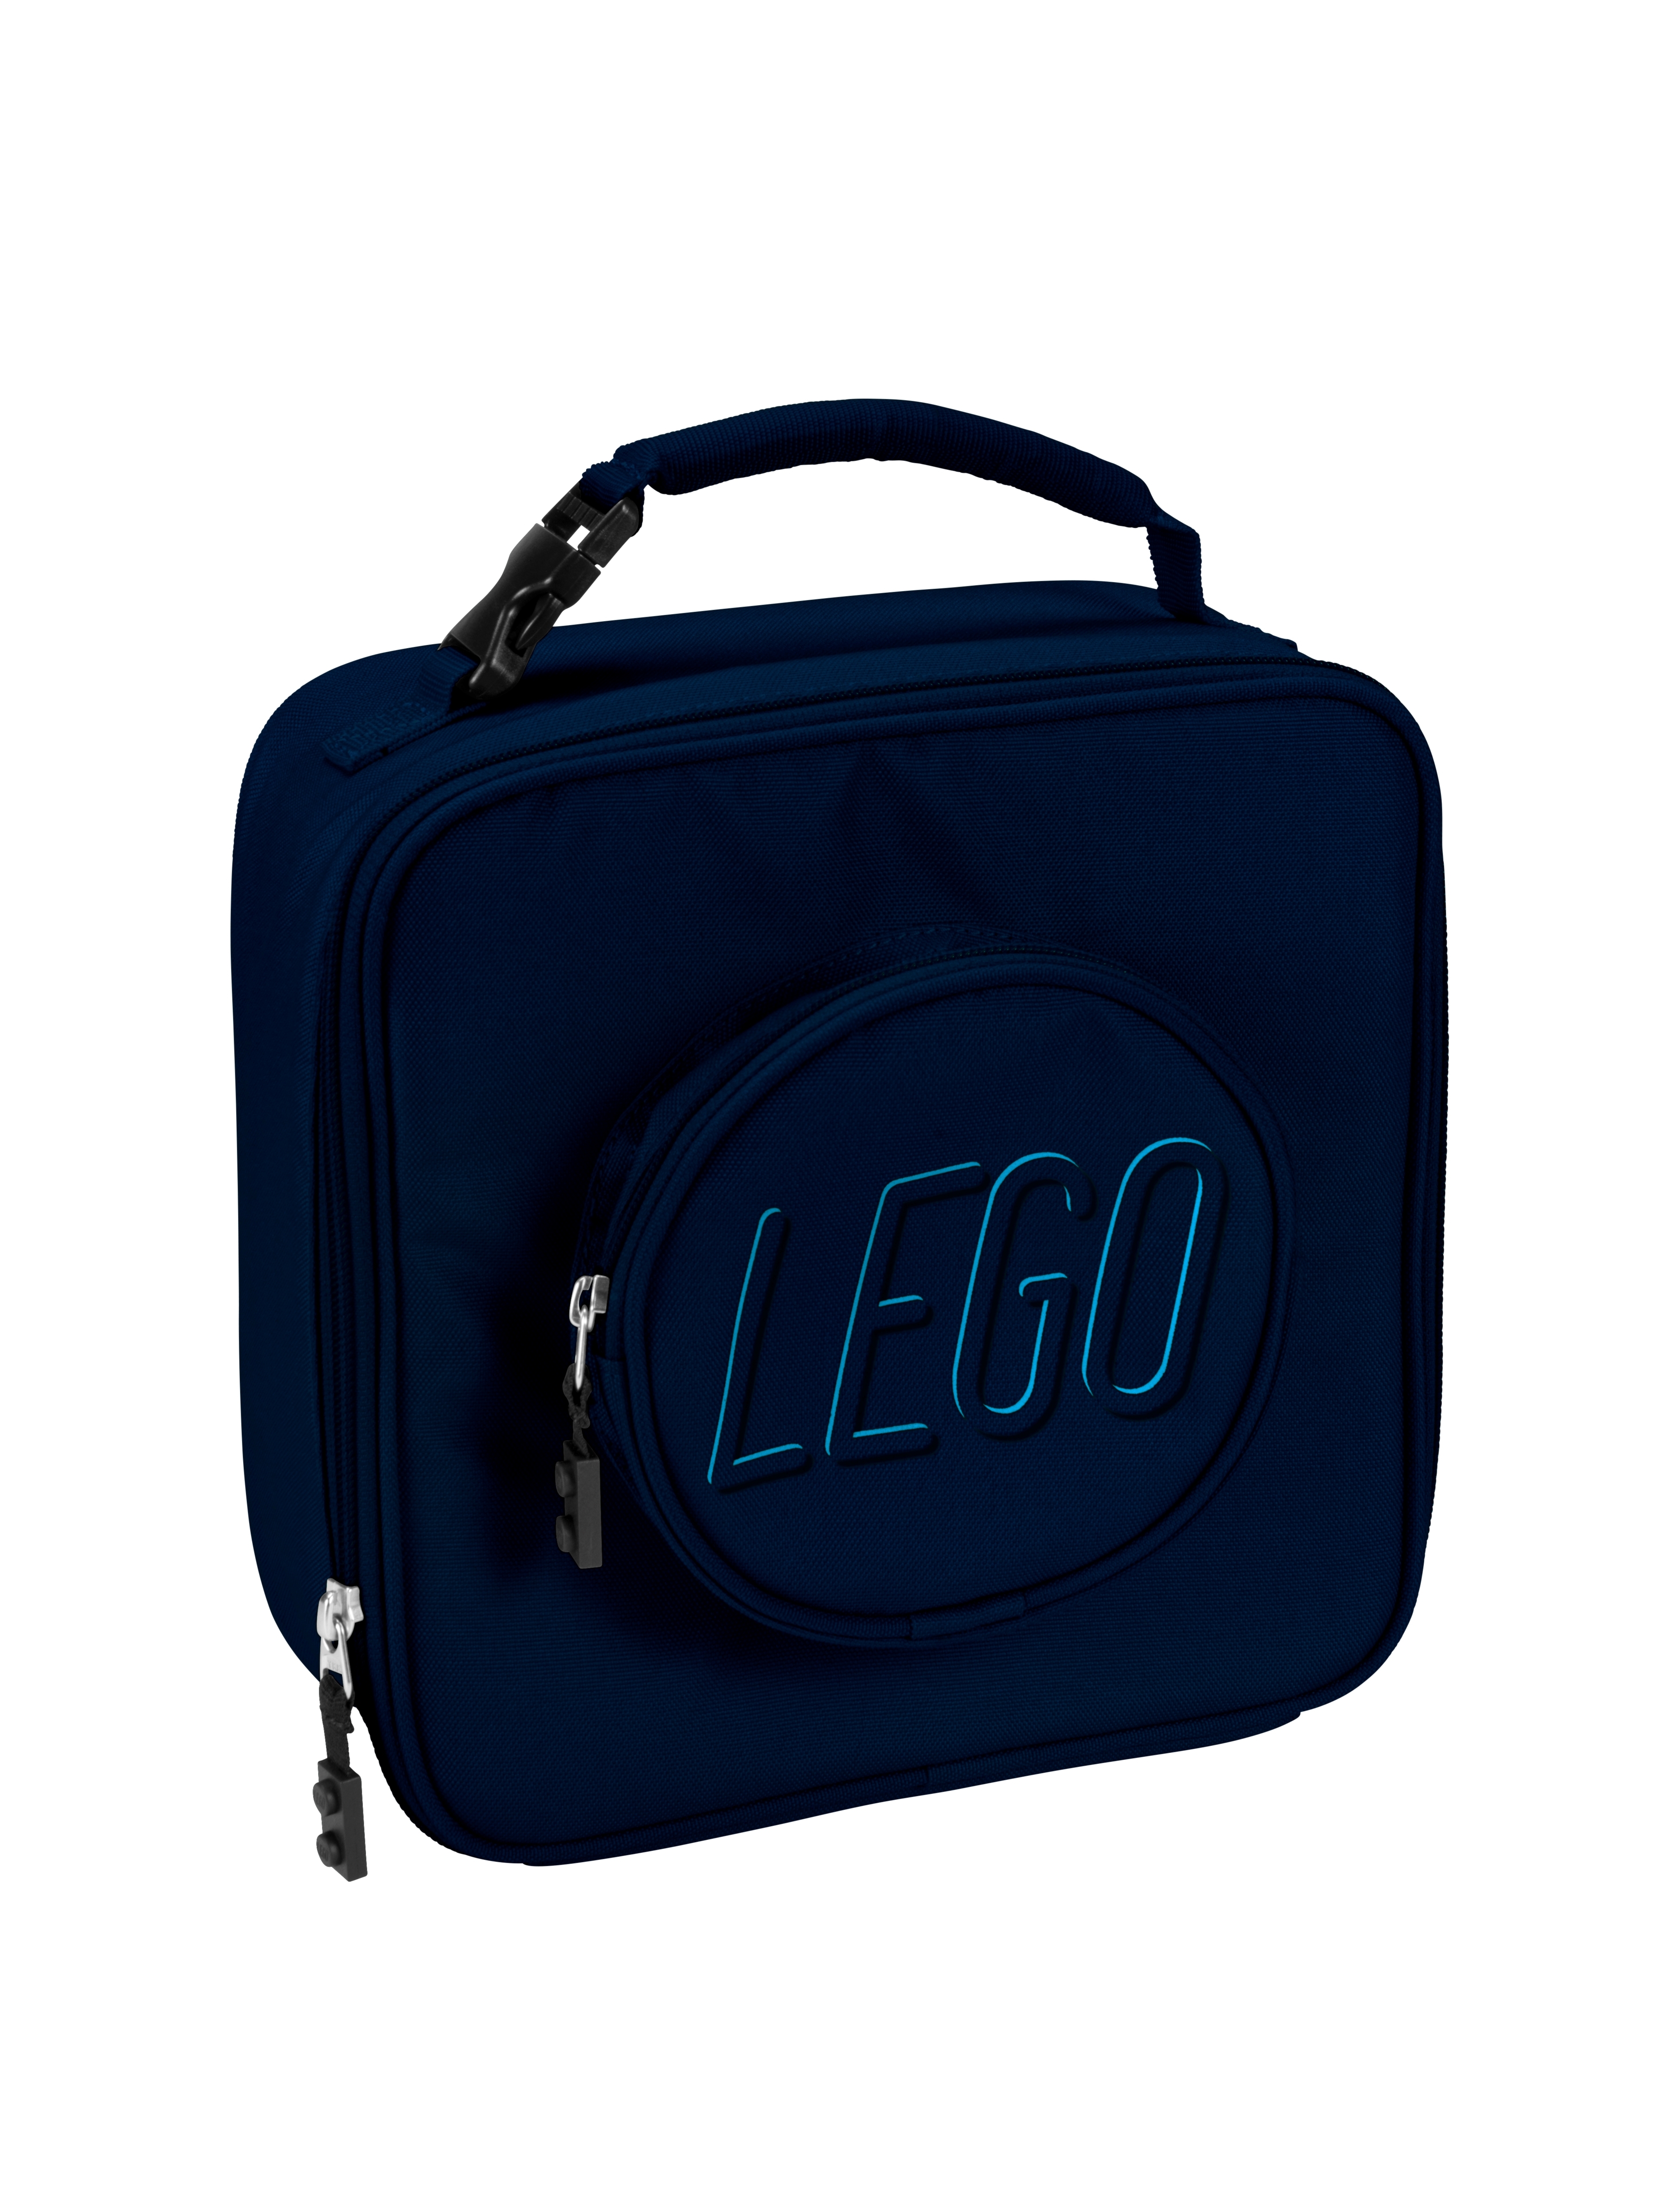 Lego minfigure lunch box with handle bricks Black storage case 4024 New! 